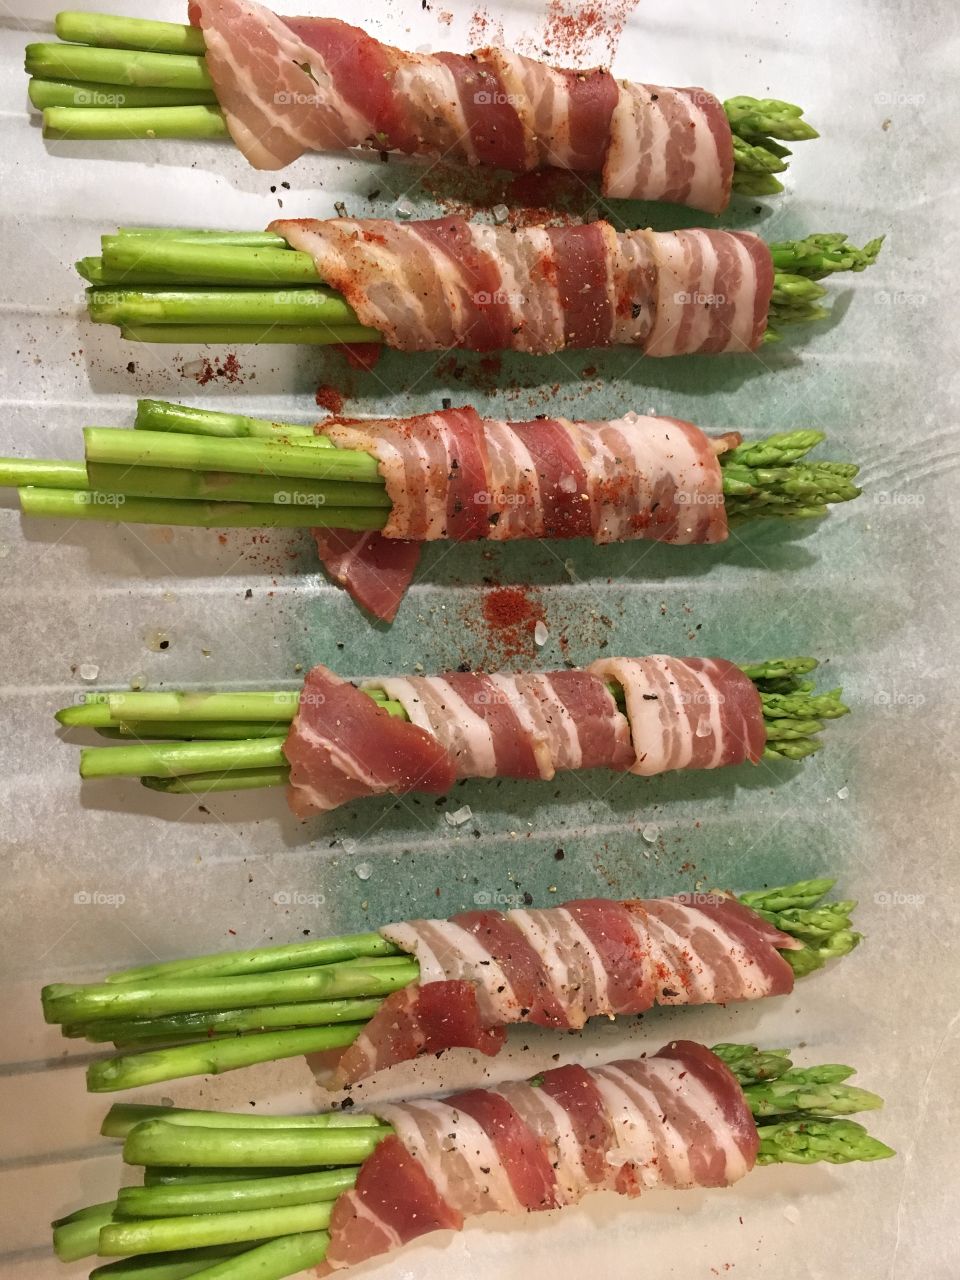 Asparagus wrap in bacon 